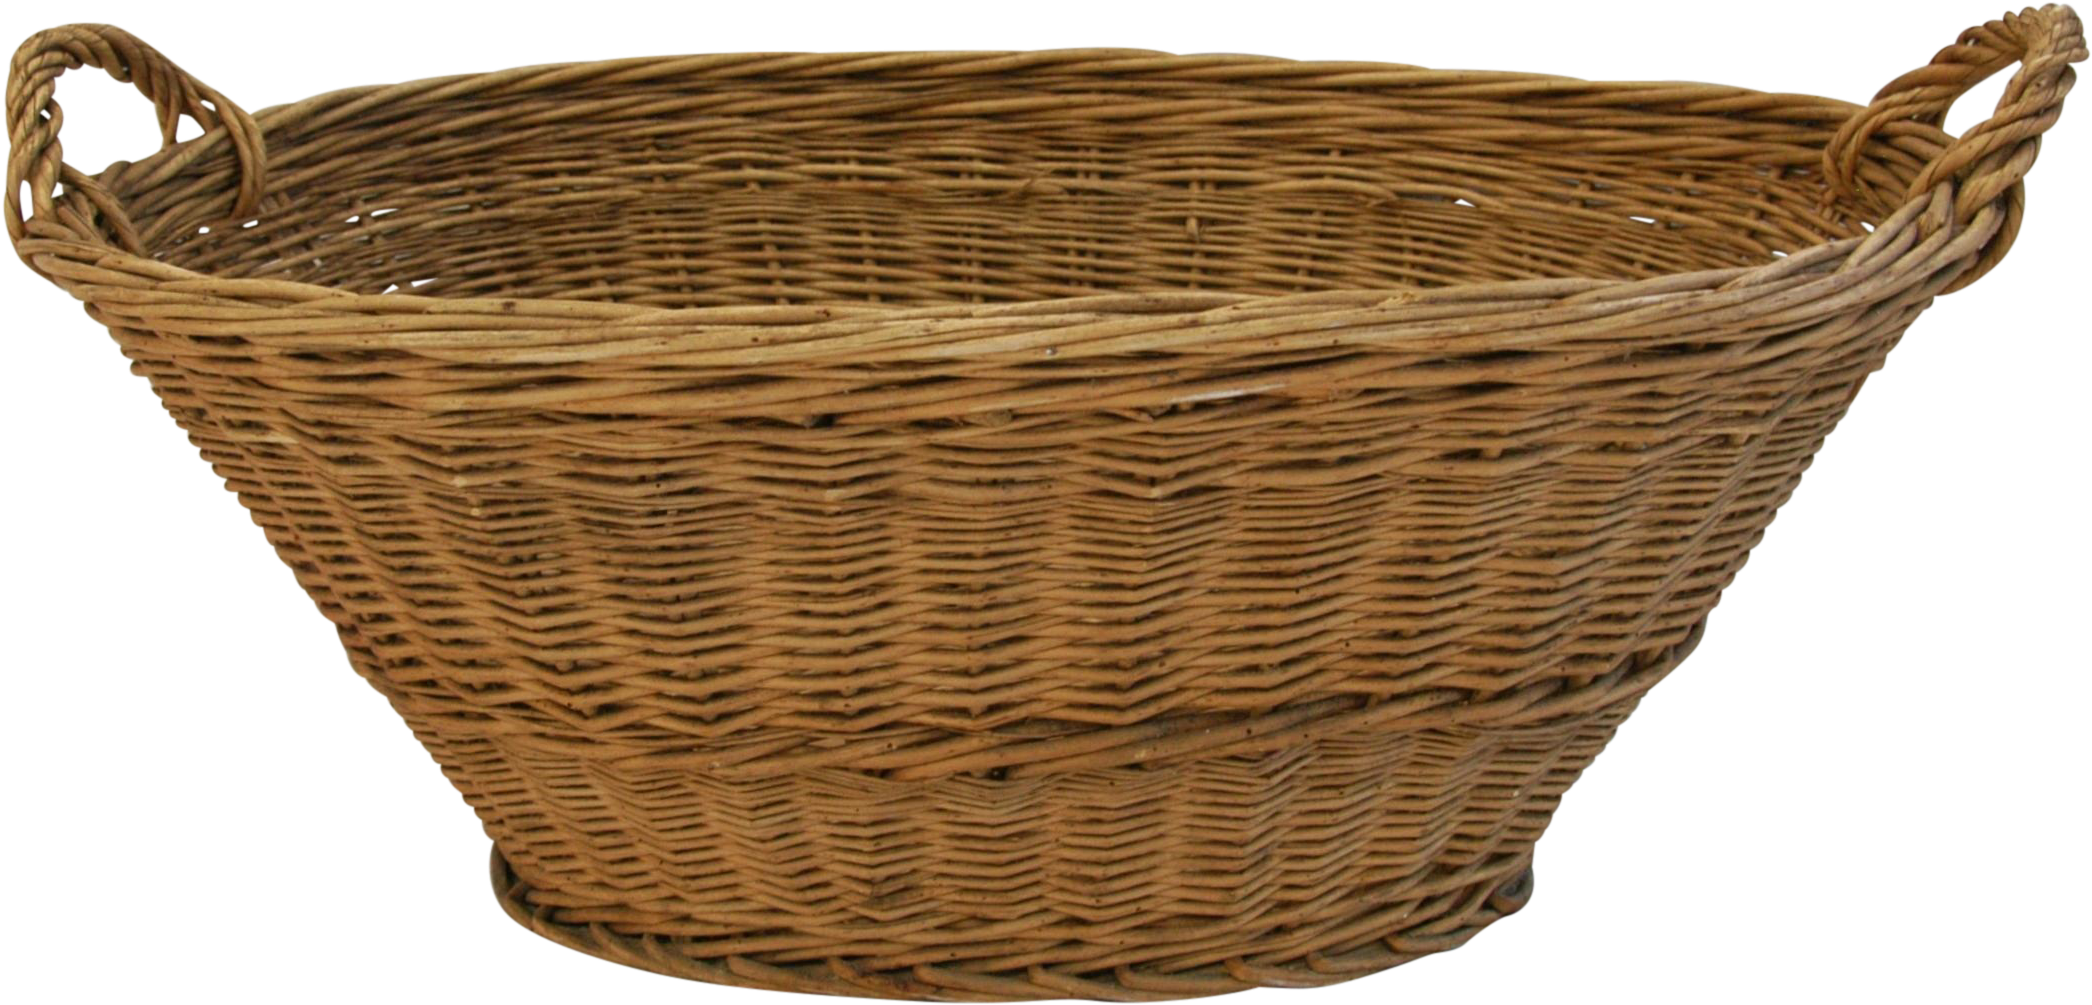 Basket PNG High Quality Image